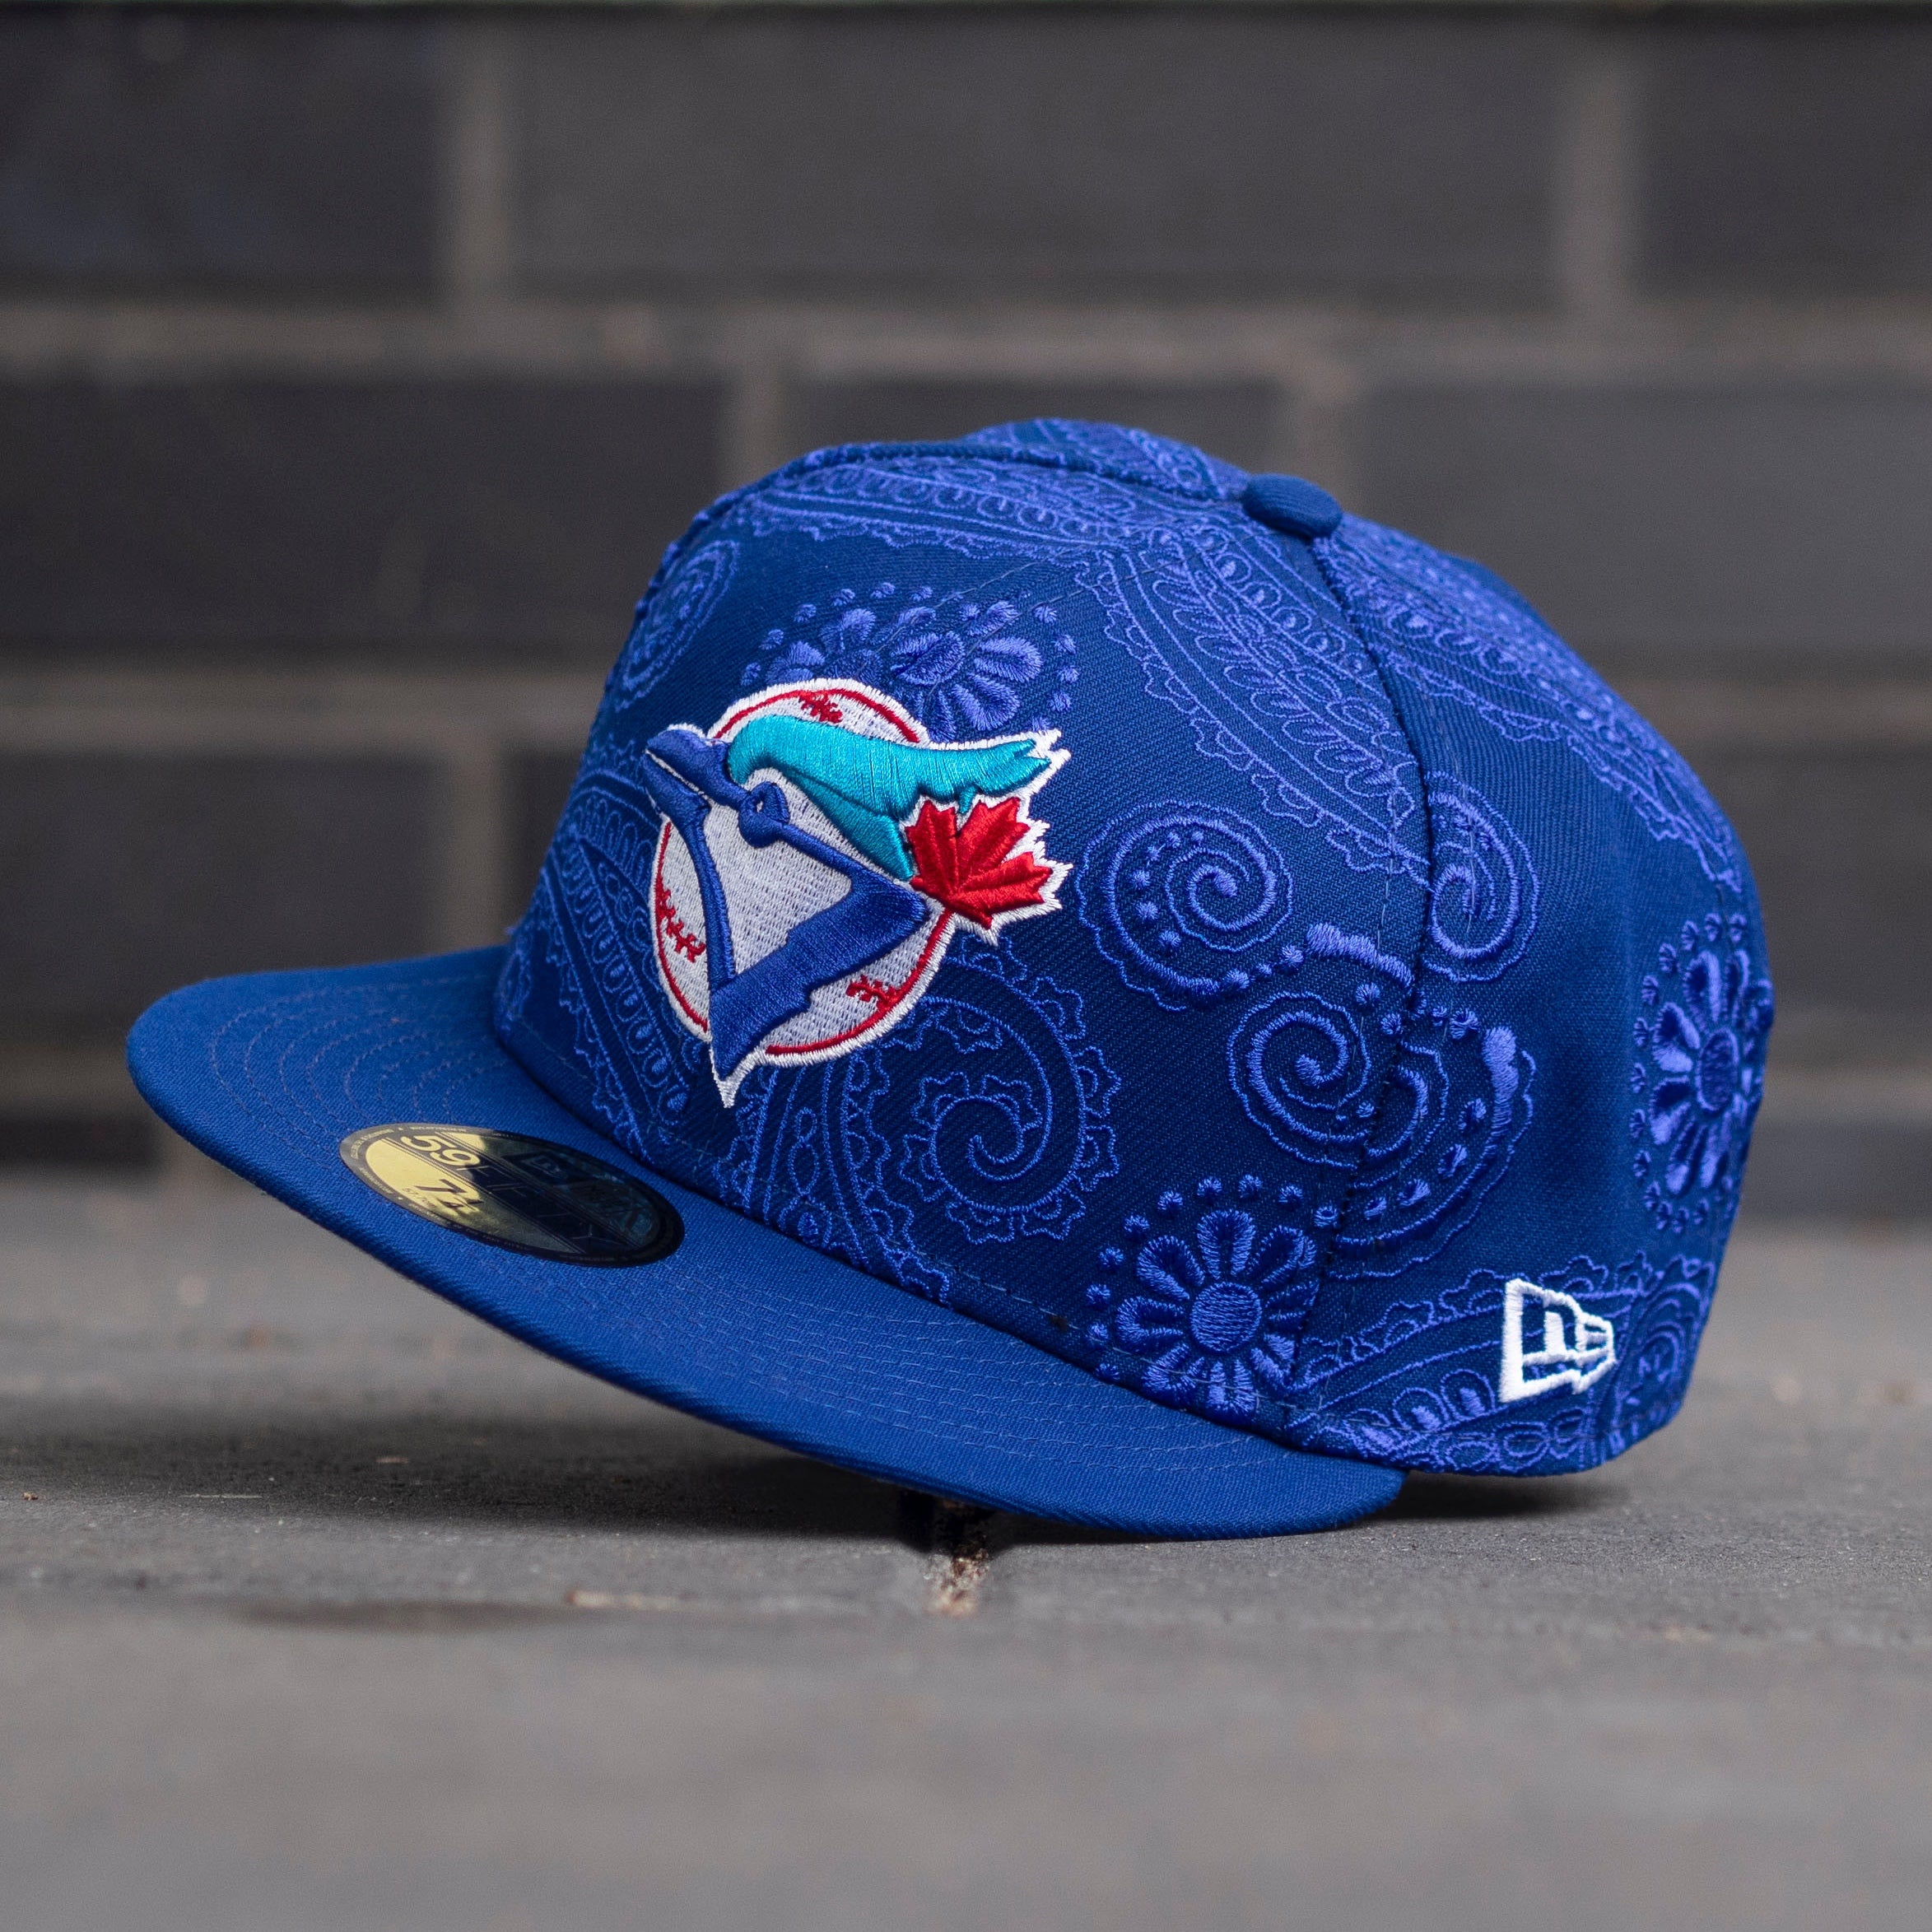 New Era Toronto Blue Jays Fitted Hat 7 1/8